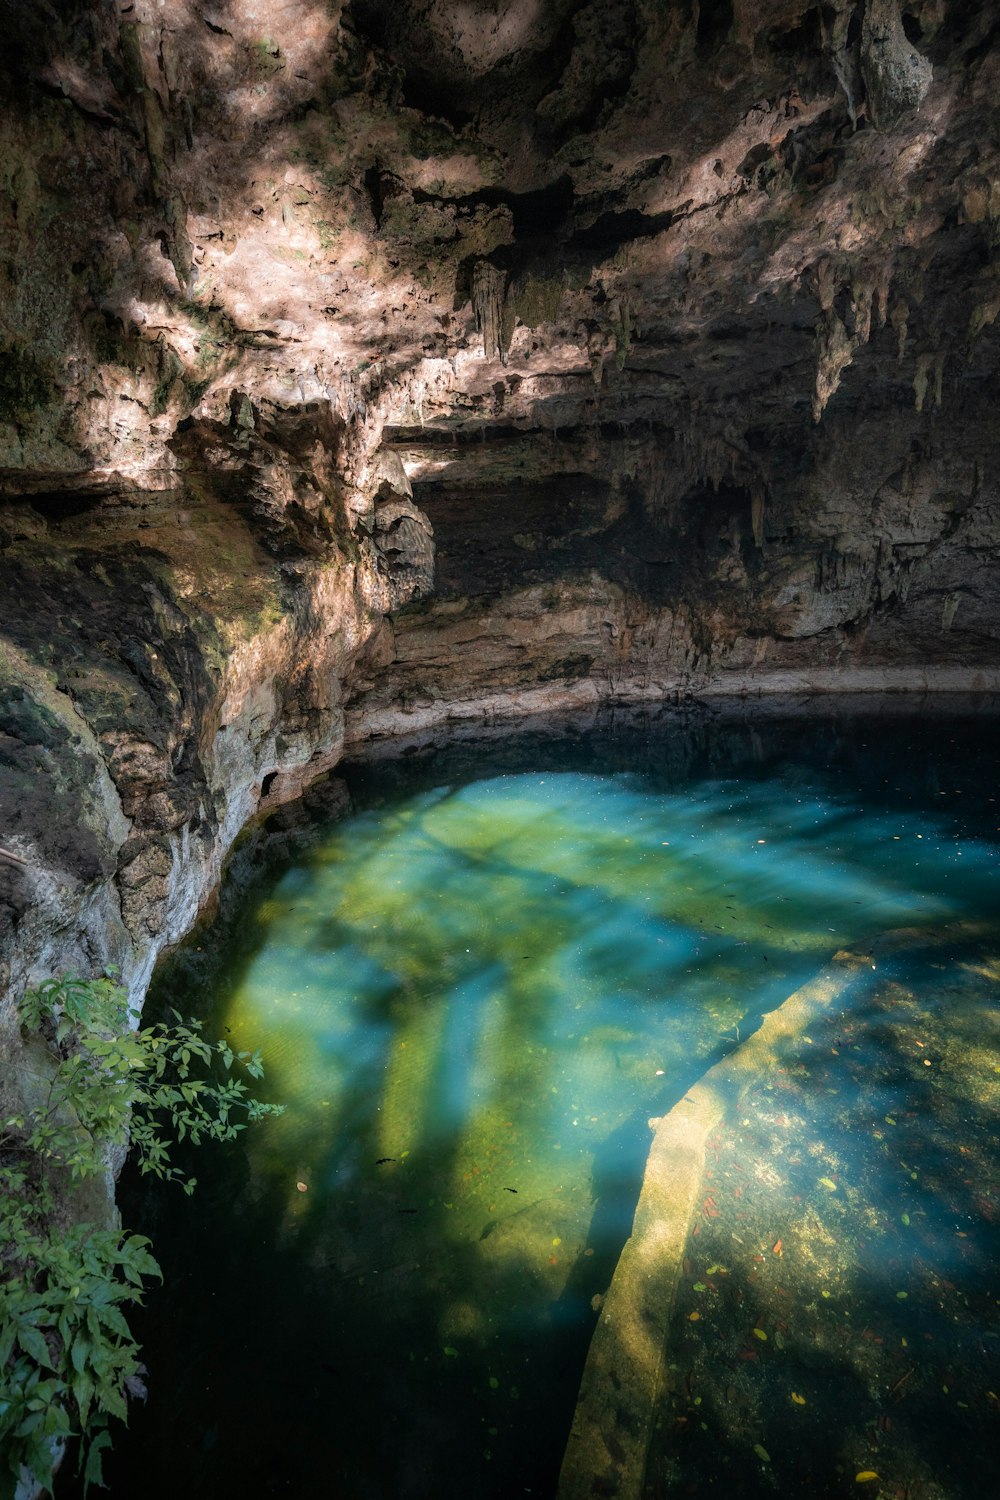 Un gran charco de agua en una cueva